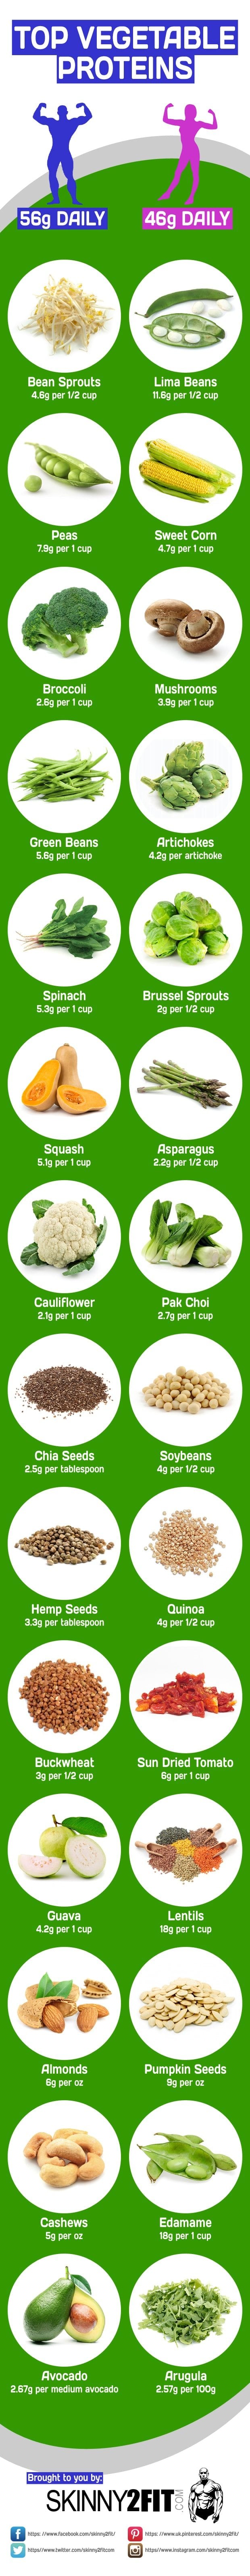 Top Vegetable Proteins